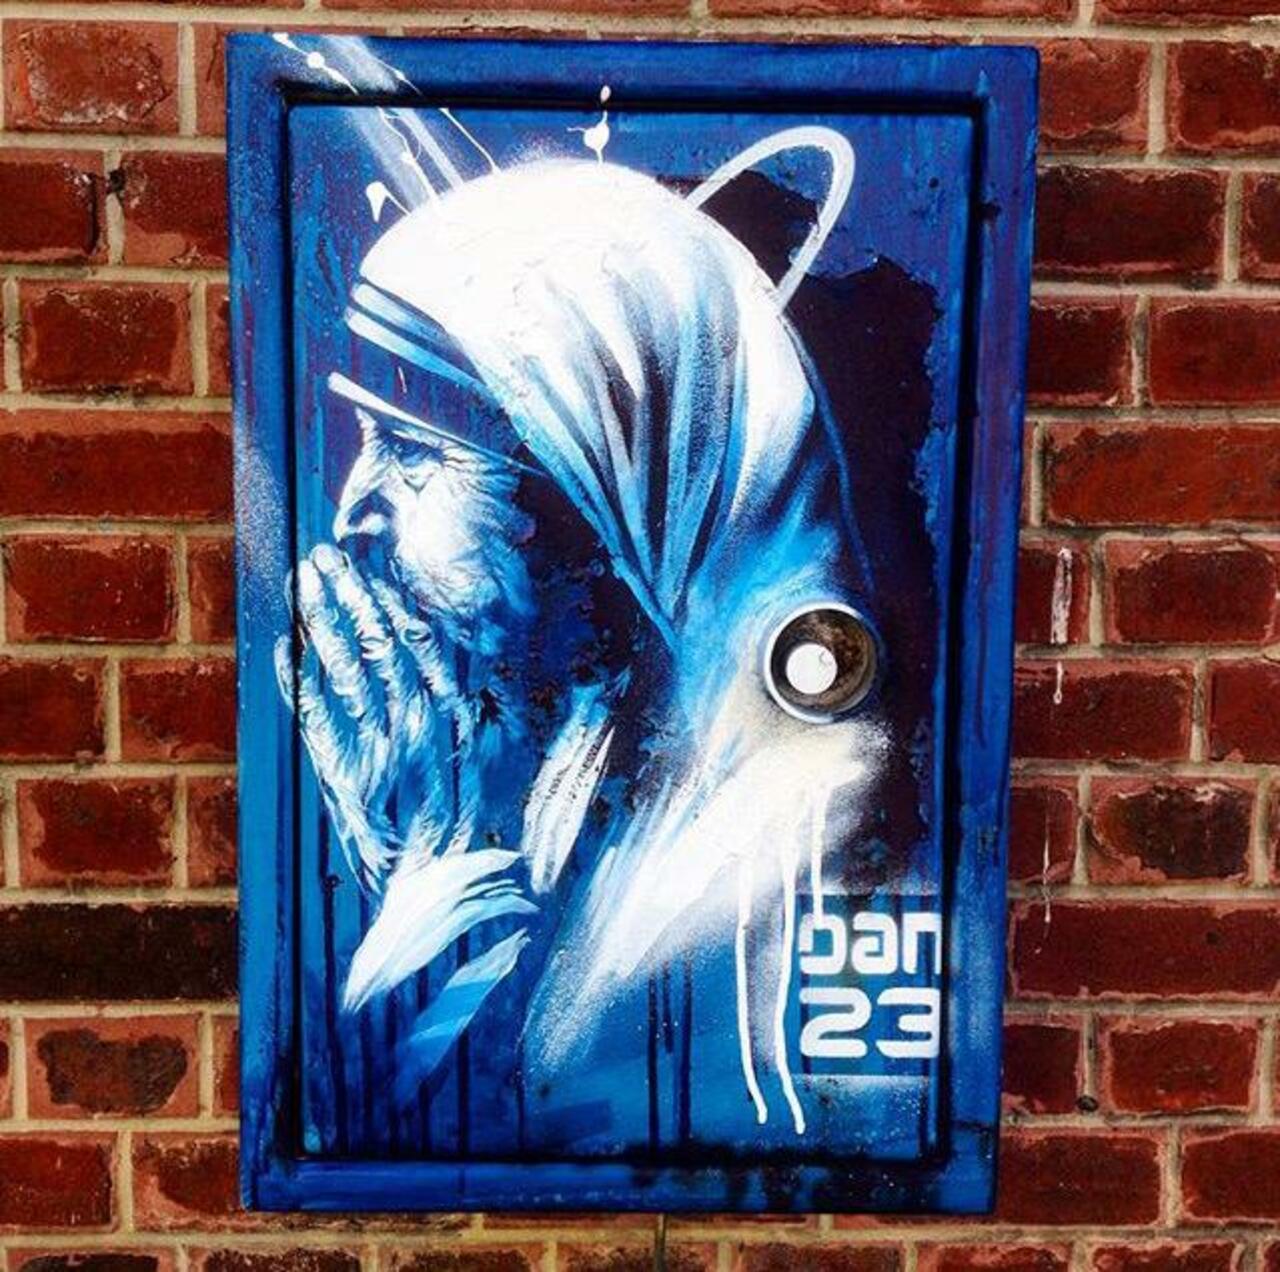 New Street Art 'Détail Spirit' by Dan23 #art #graffiti #mural #streetart http://t.co/PtrgxEwYME http://twitter.com/charlesjackso14/status/649560664013467649